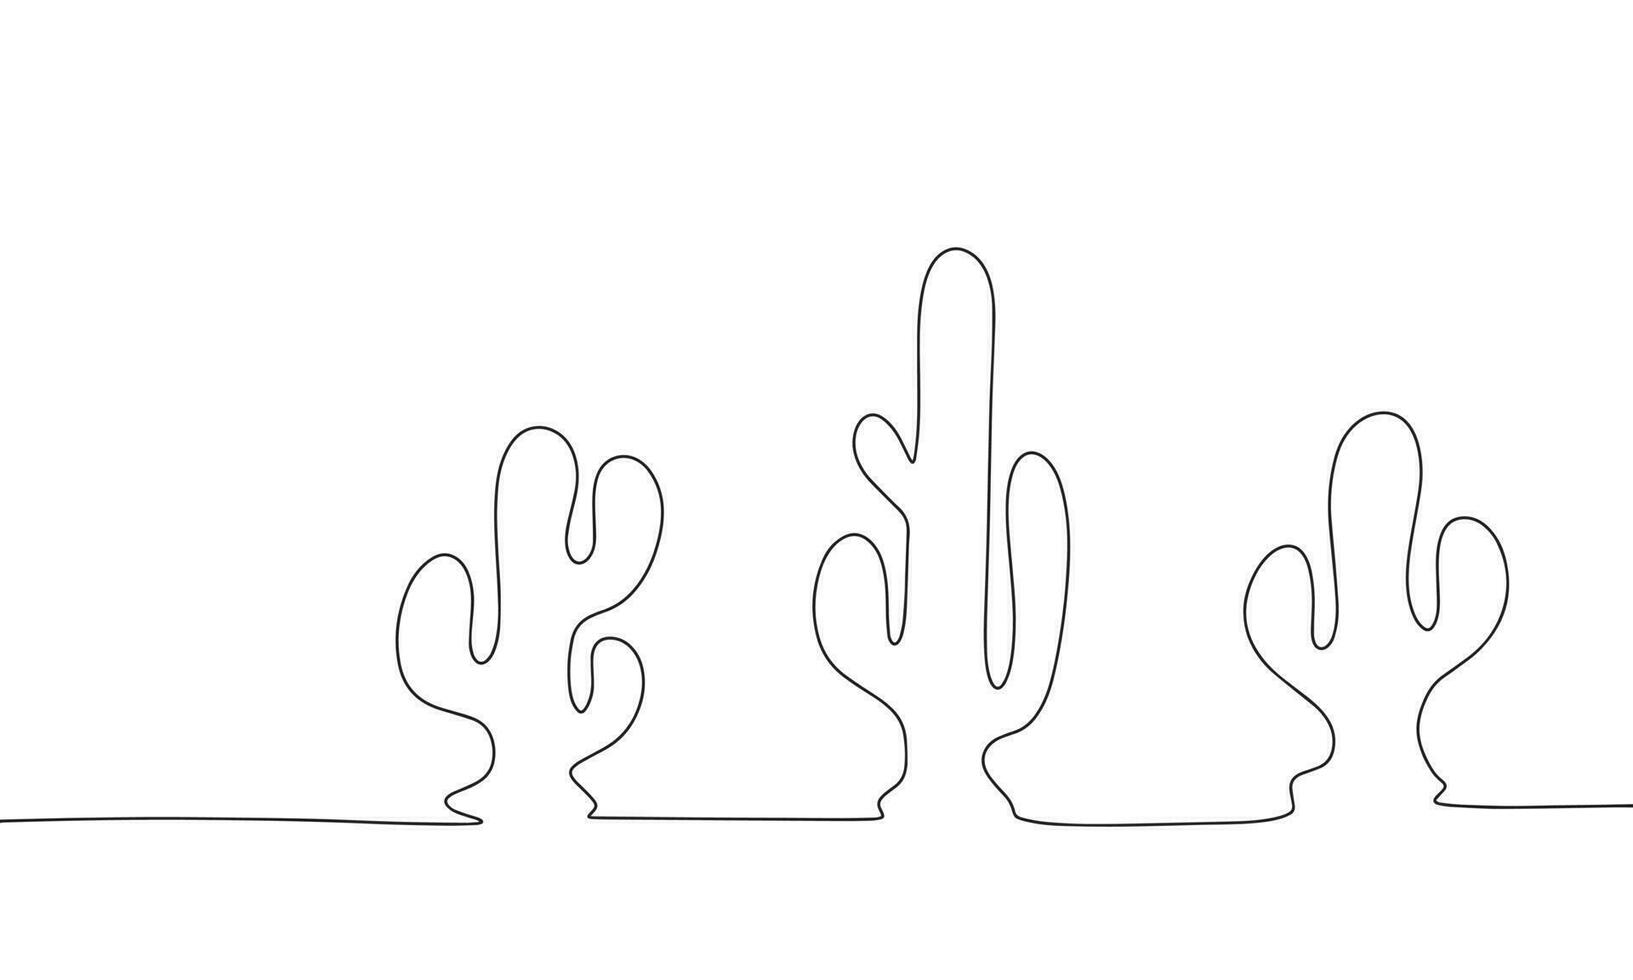 silueta cactus en fila. uno línea continuo resumen concepción de naturaleza en desierto. línea arte, describir, silueta, vector ilustración.